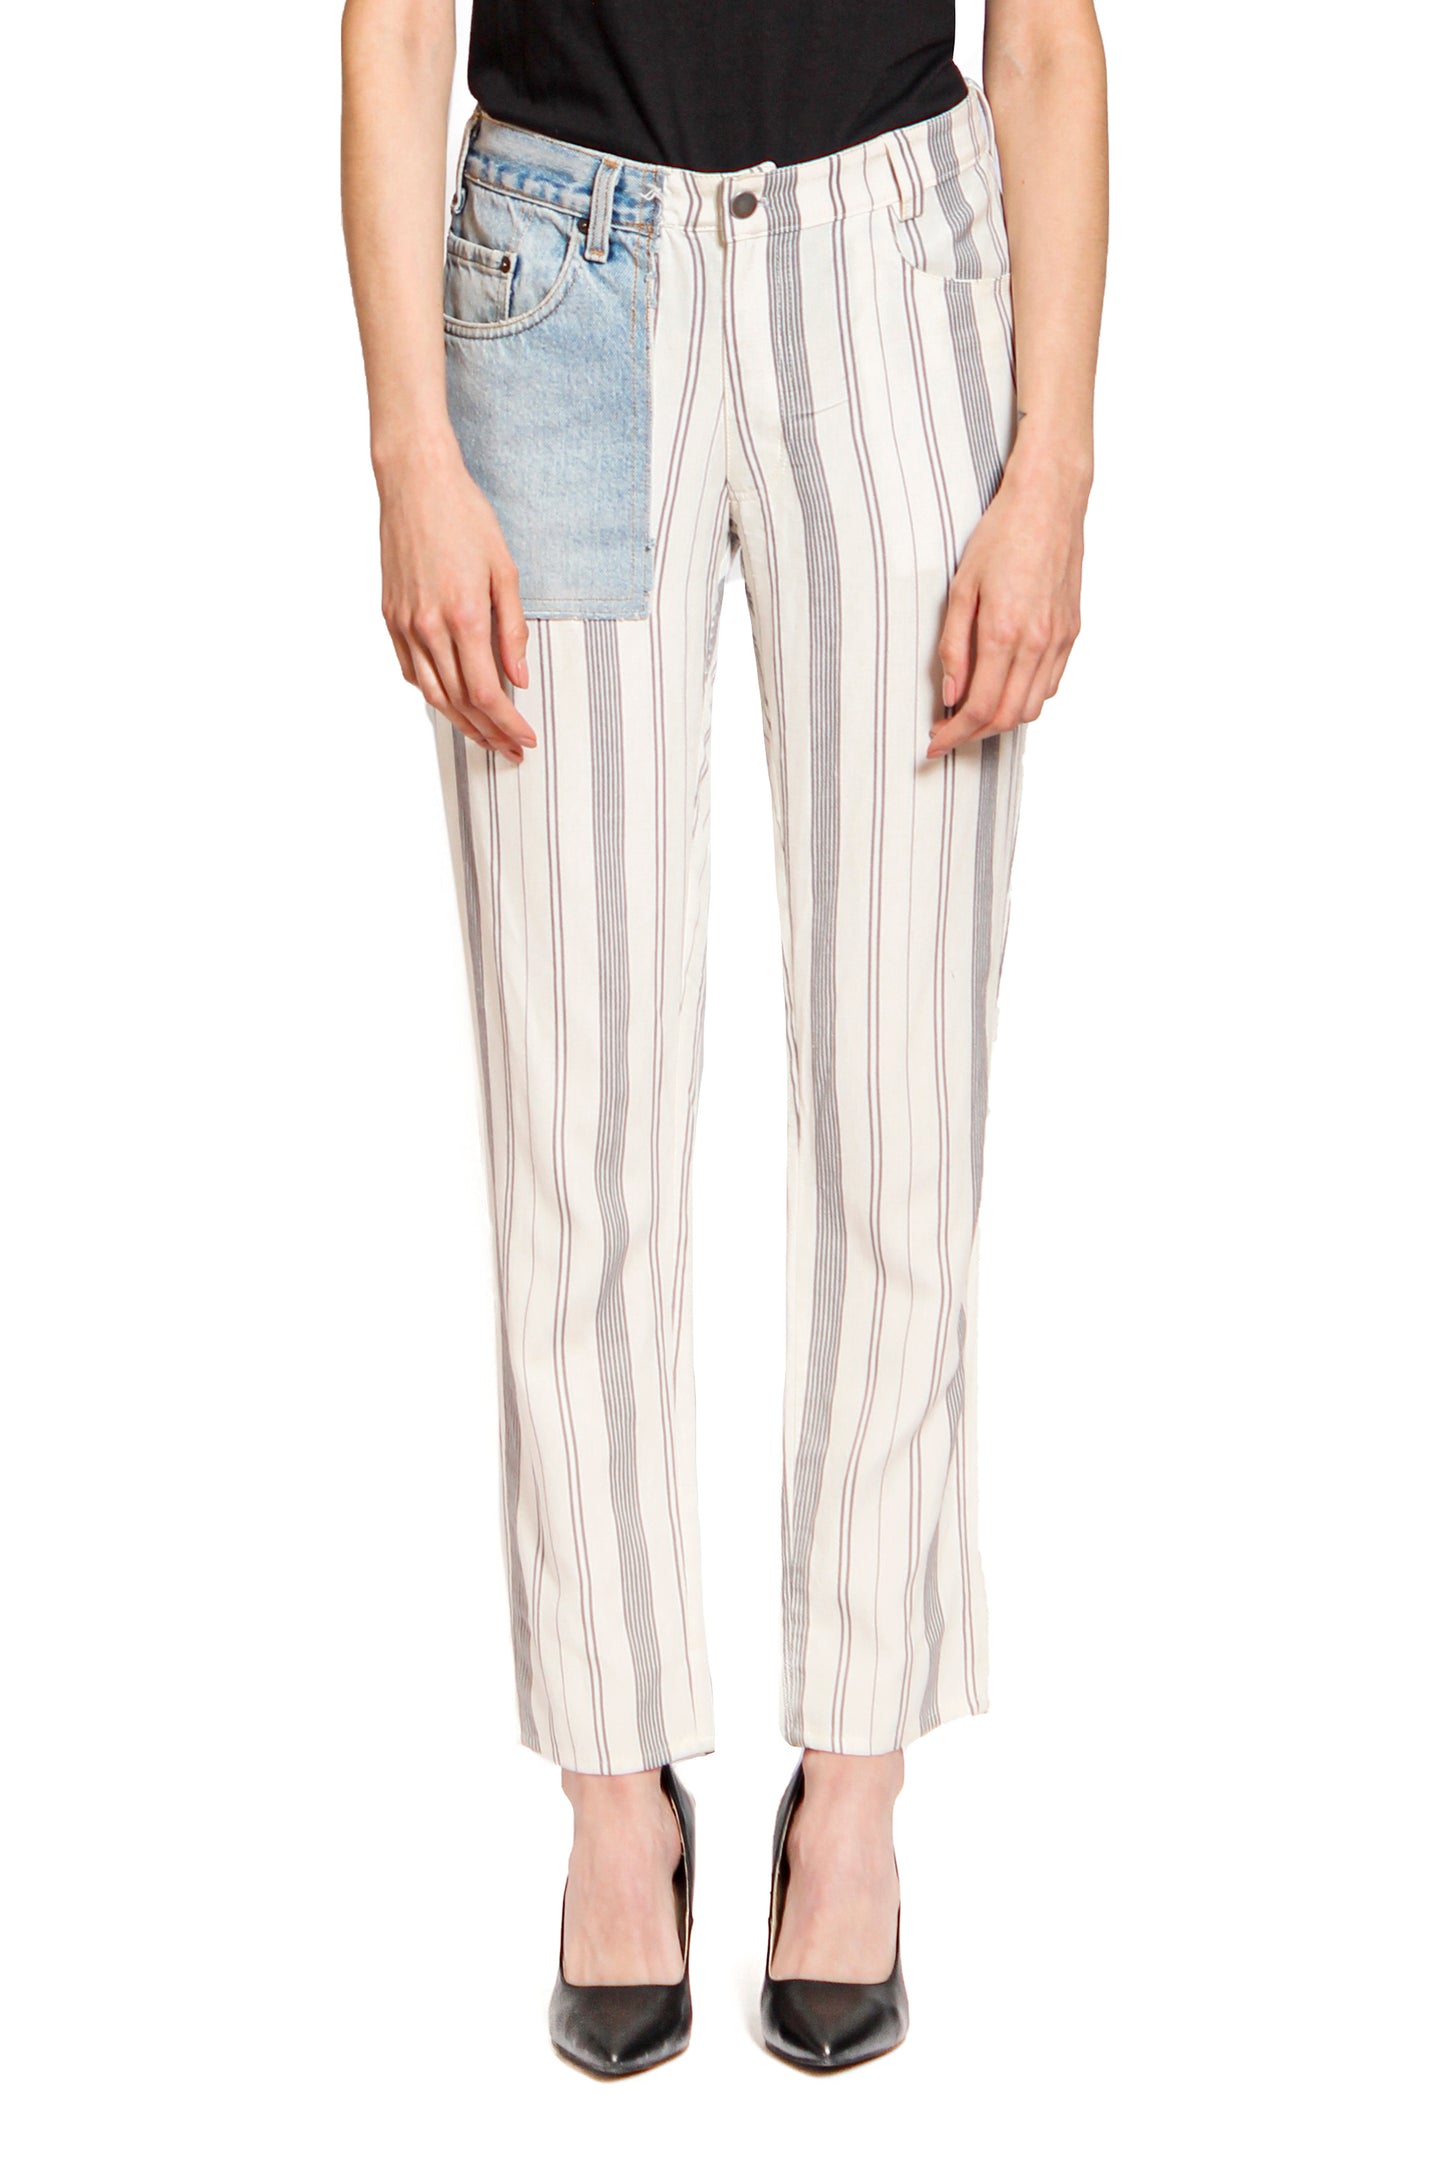 Stripe pants with upcycled vintage denim